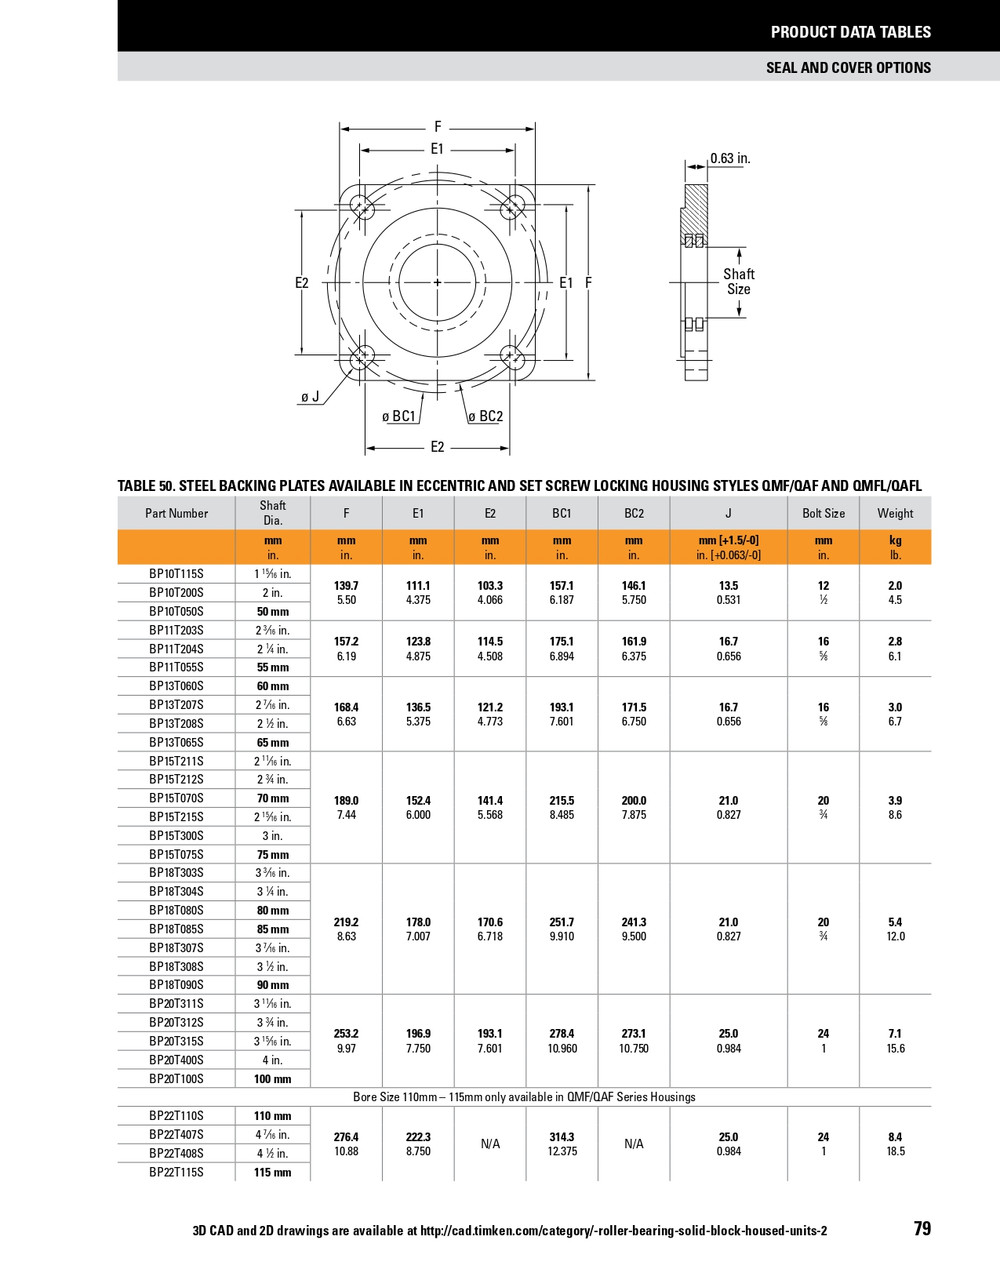 1-15/16" Timken SRB Square Flange Backing Plate w/Dual Teflon Seals  BP10T115S